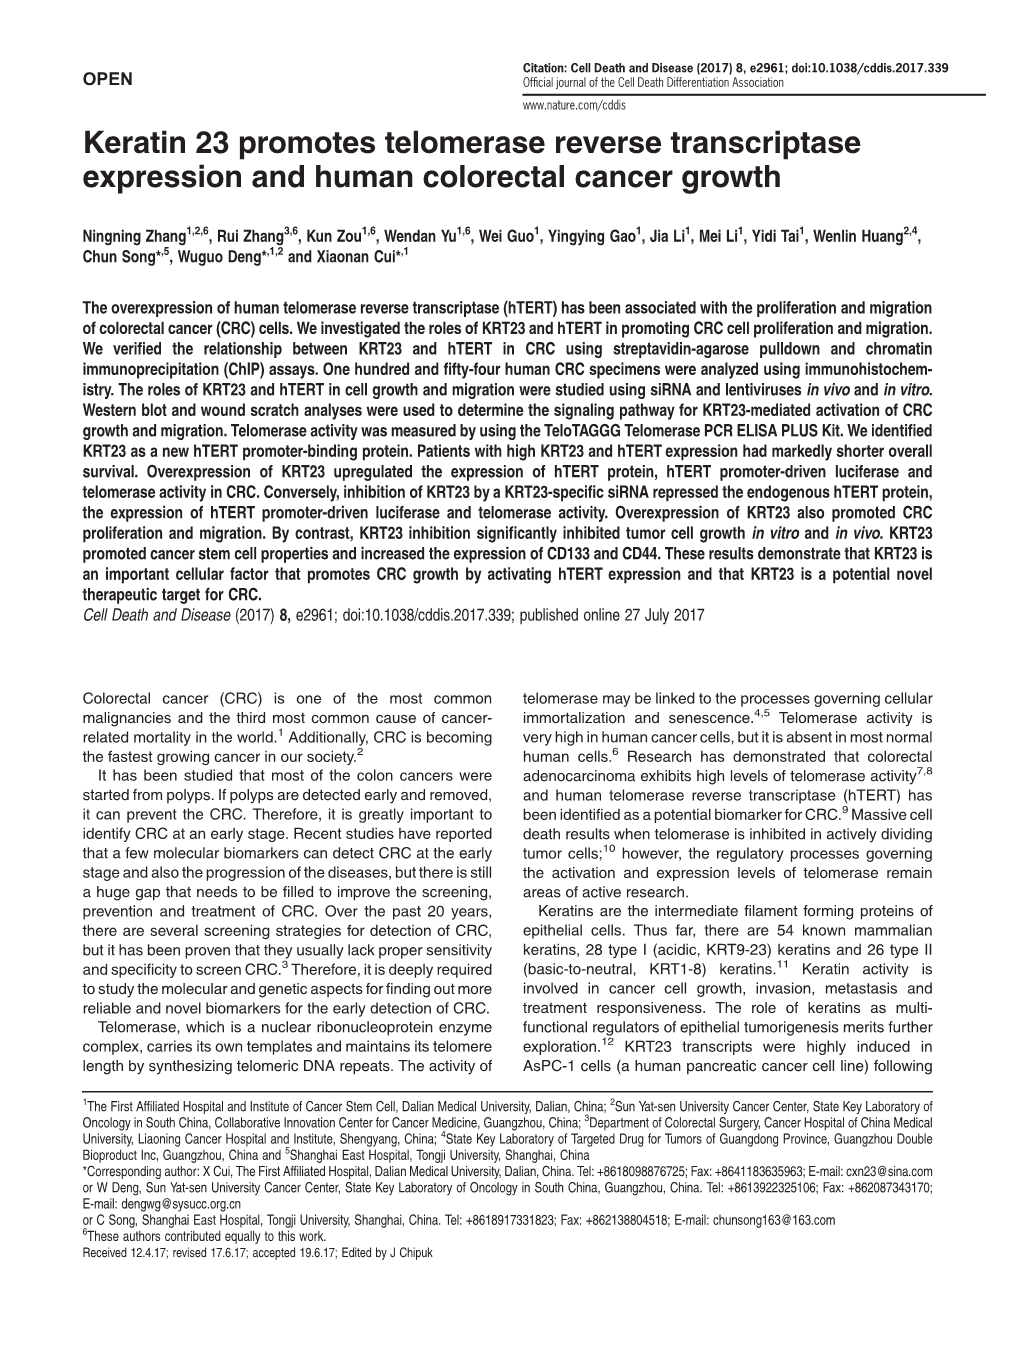 Keratin 23 Promotes Telomerase Reverse Transcriptase Expression and Human Colorectal Cancer Growth